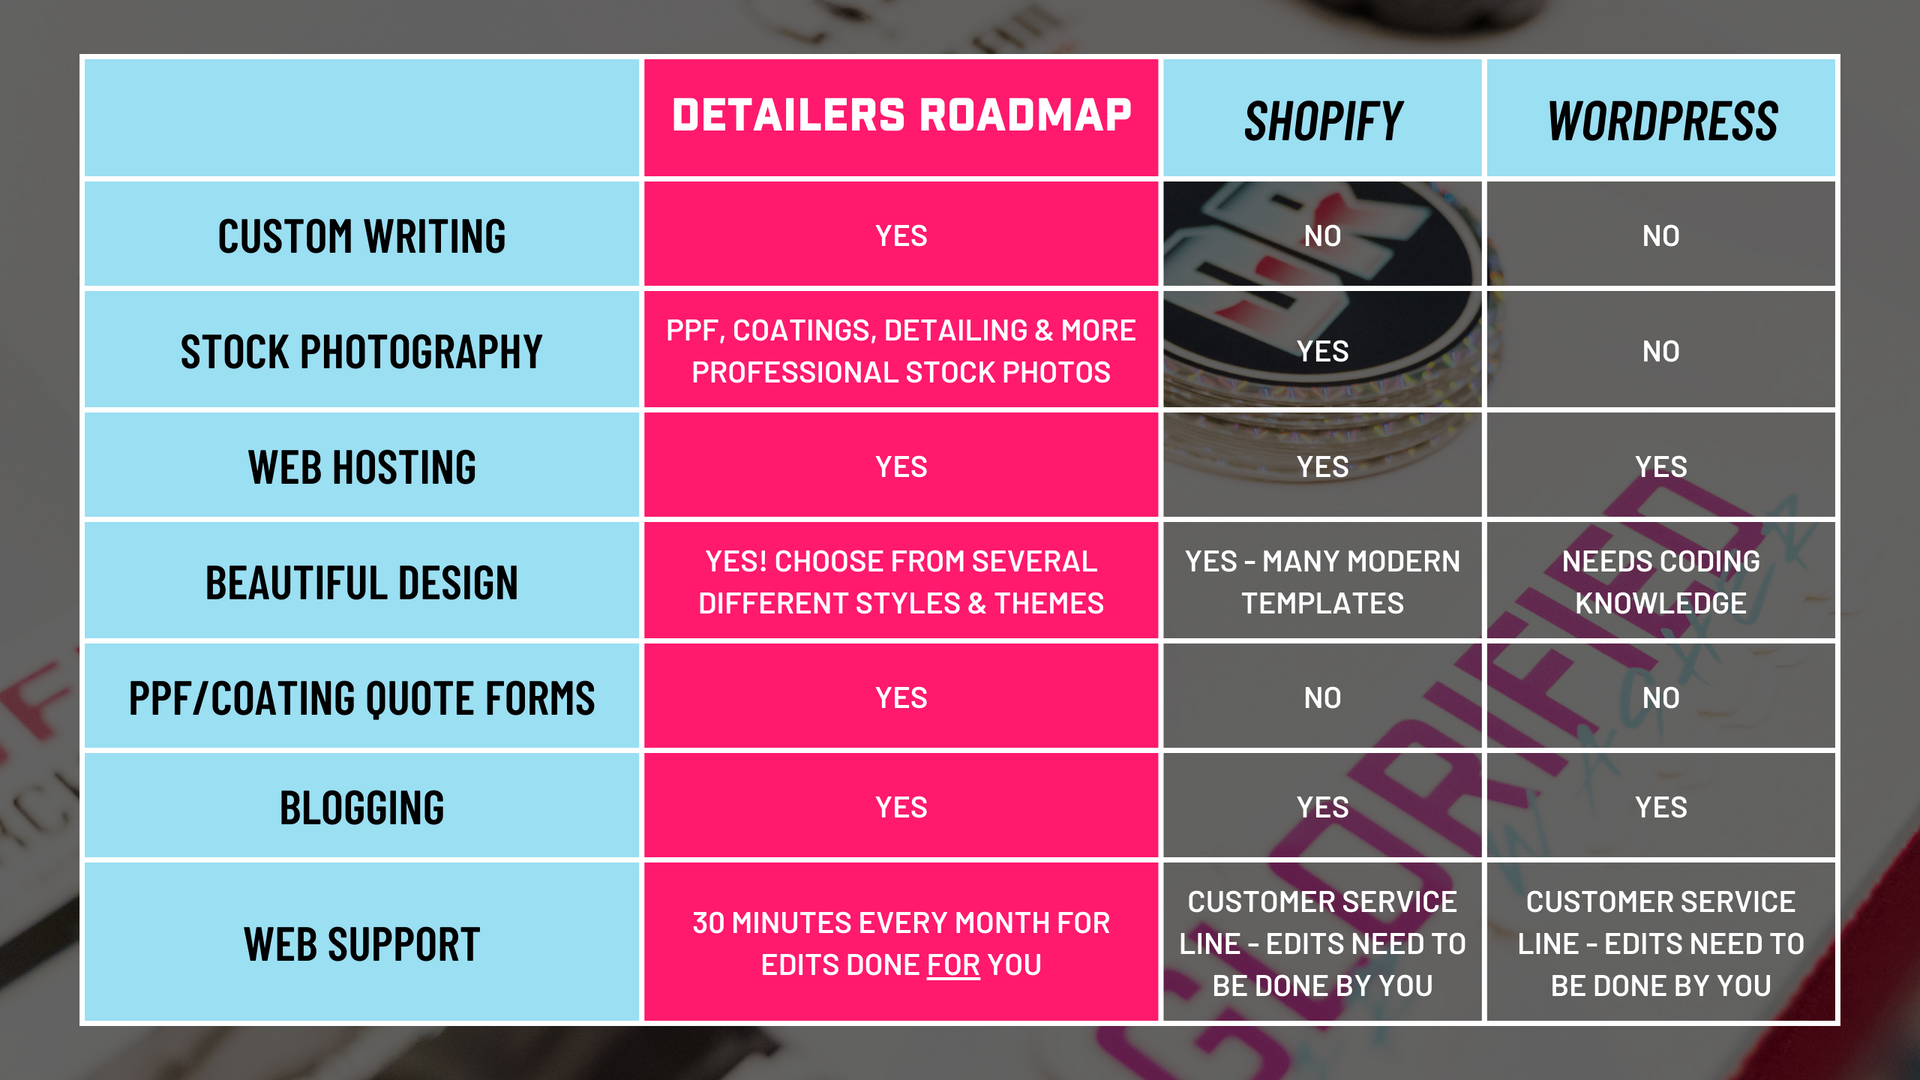 Detailers Roadmap Features